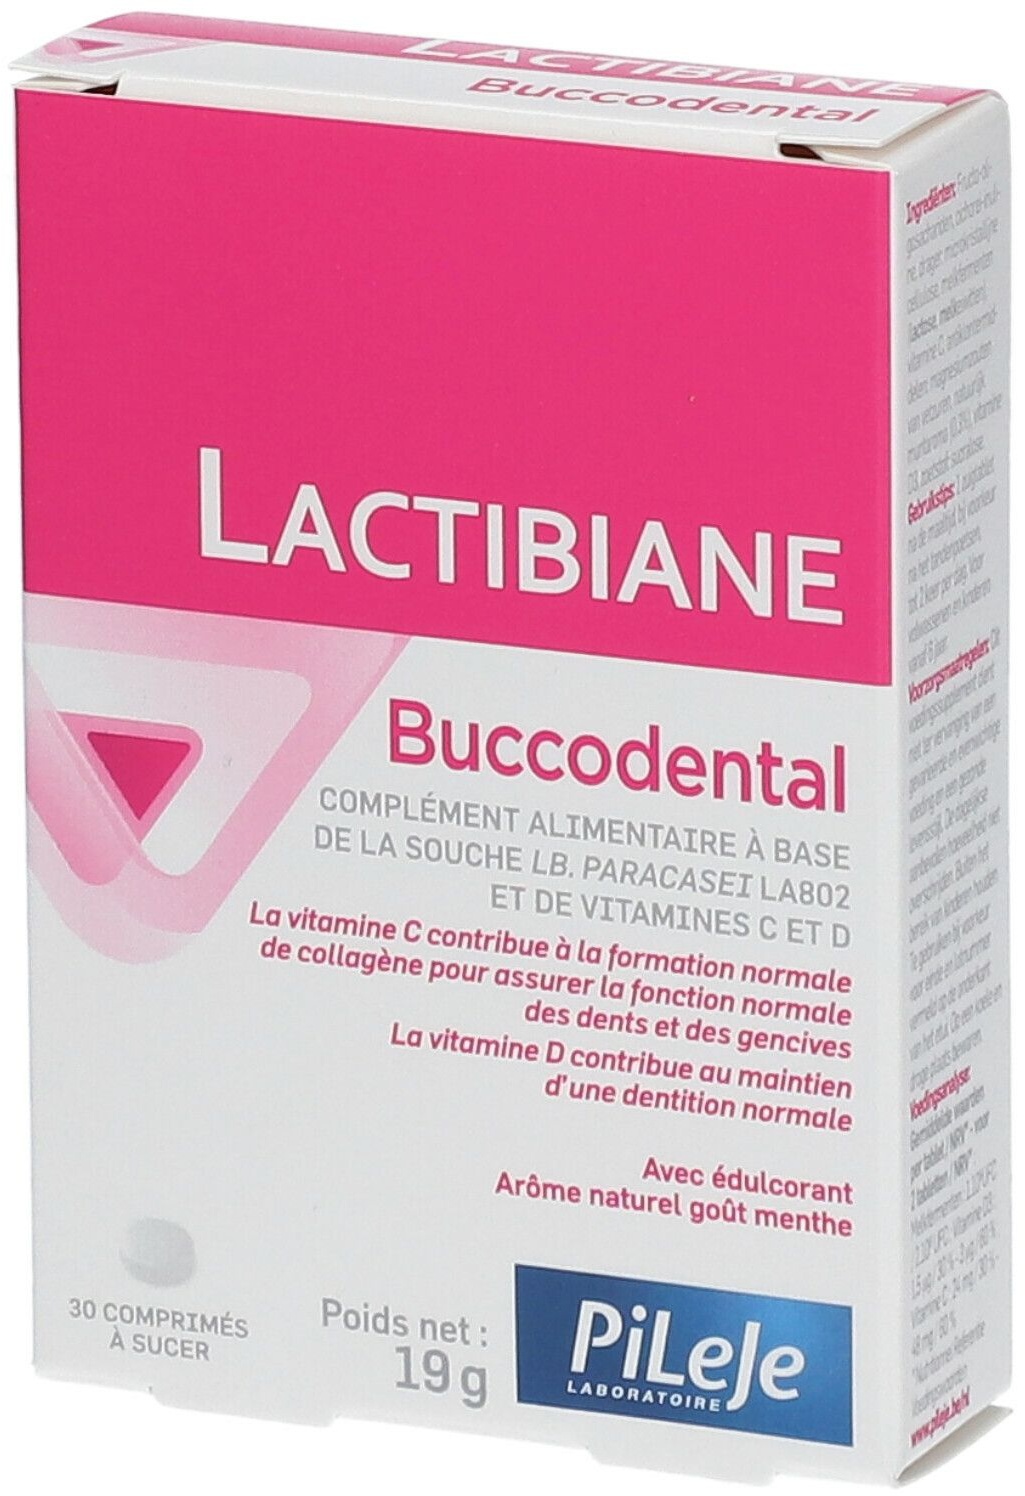 LACTIBIANE Buccodental 30 pc(s) comprimé(s)